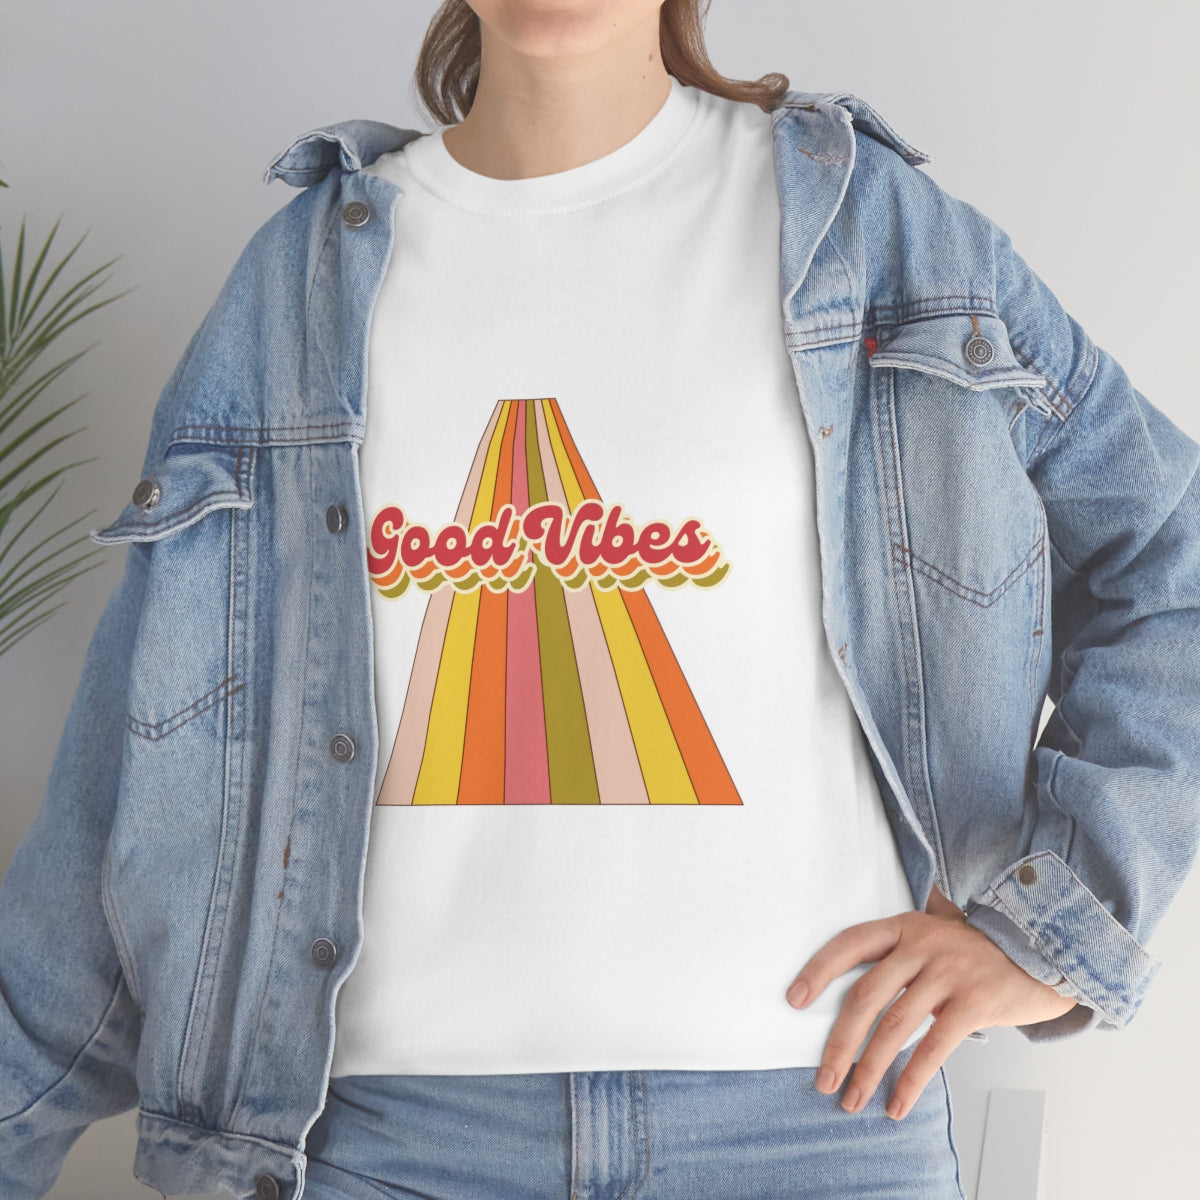 Good Vibes Shirt, Good Vibes Only Shirt, Retro Good Vibes Tshirt, Hippie Shirt, Retro Inspired Shirt, Boho Shirt, Peace Shirt, Unisex Tee - The Good Life Vibe